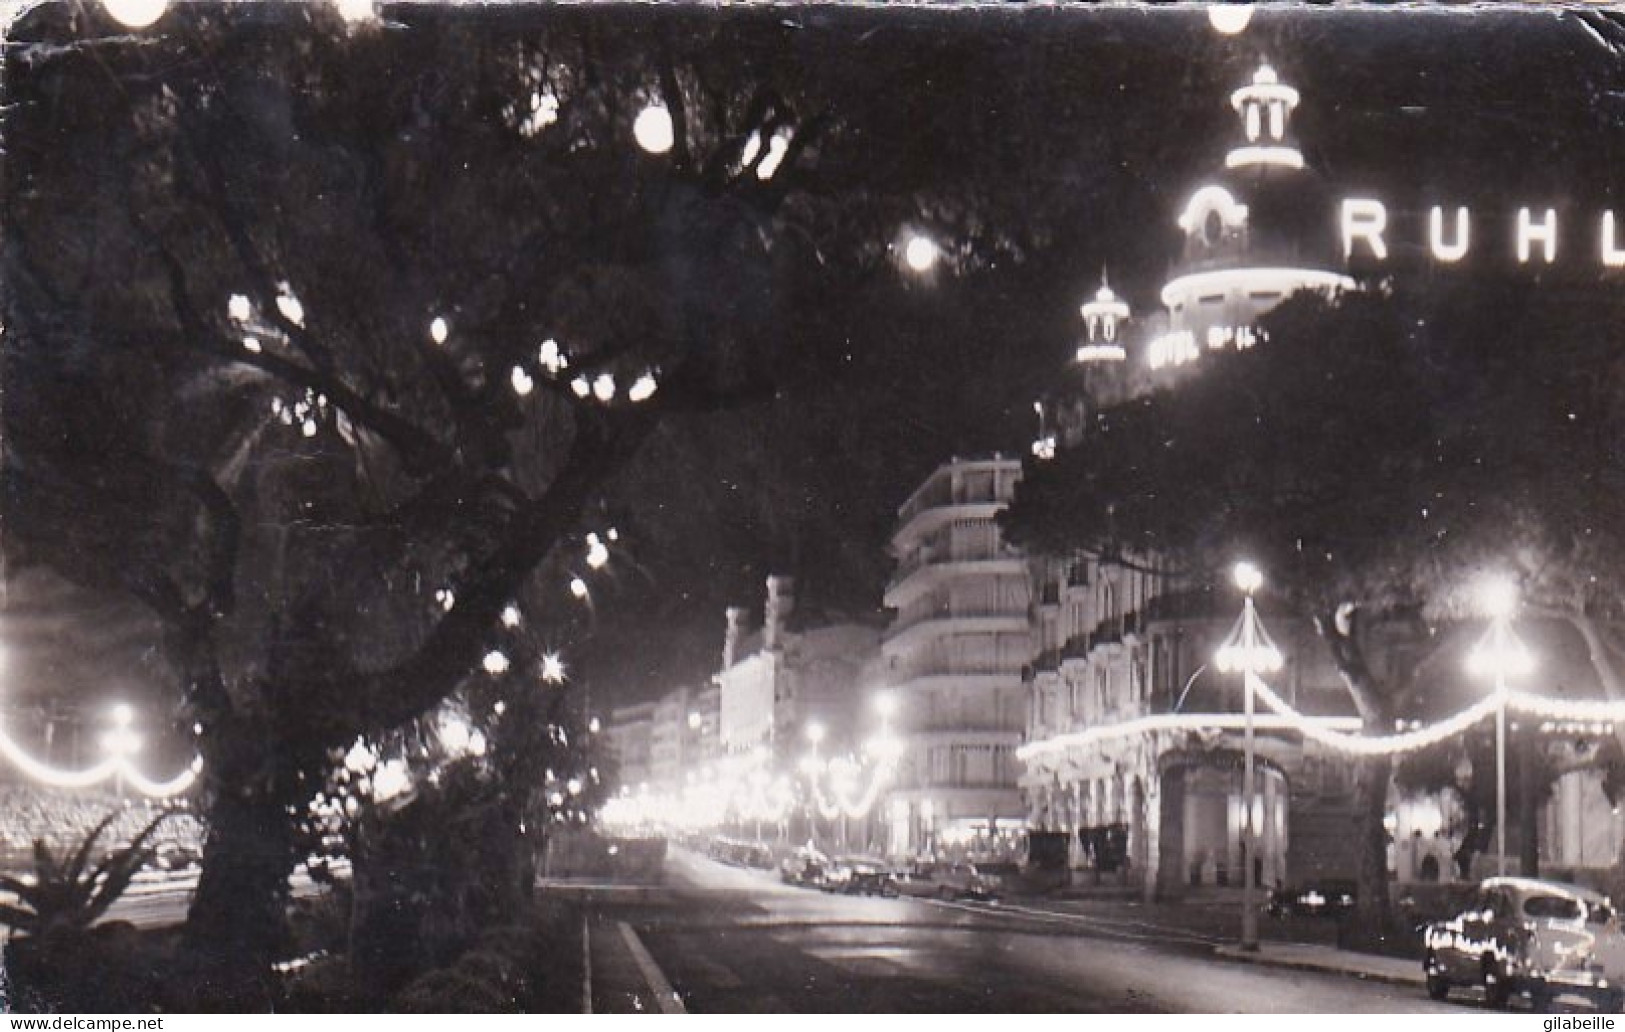 06 - NICE - La Promenade Des Anglais Et Les Illuminations - Nice Bij Nacht